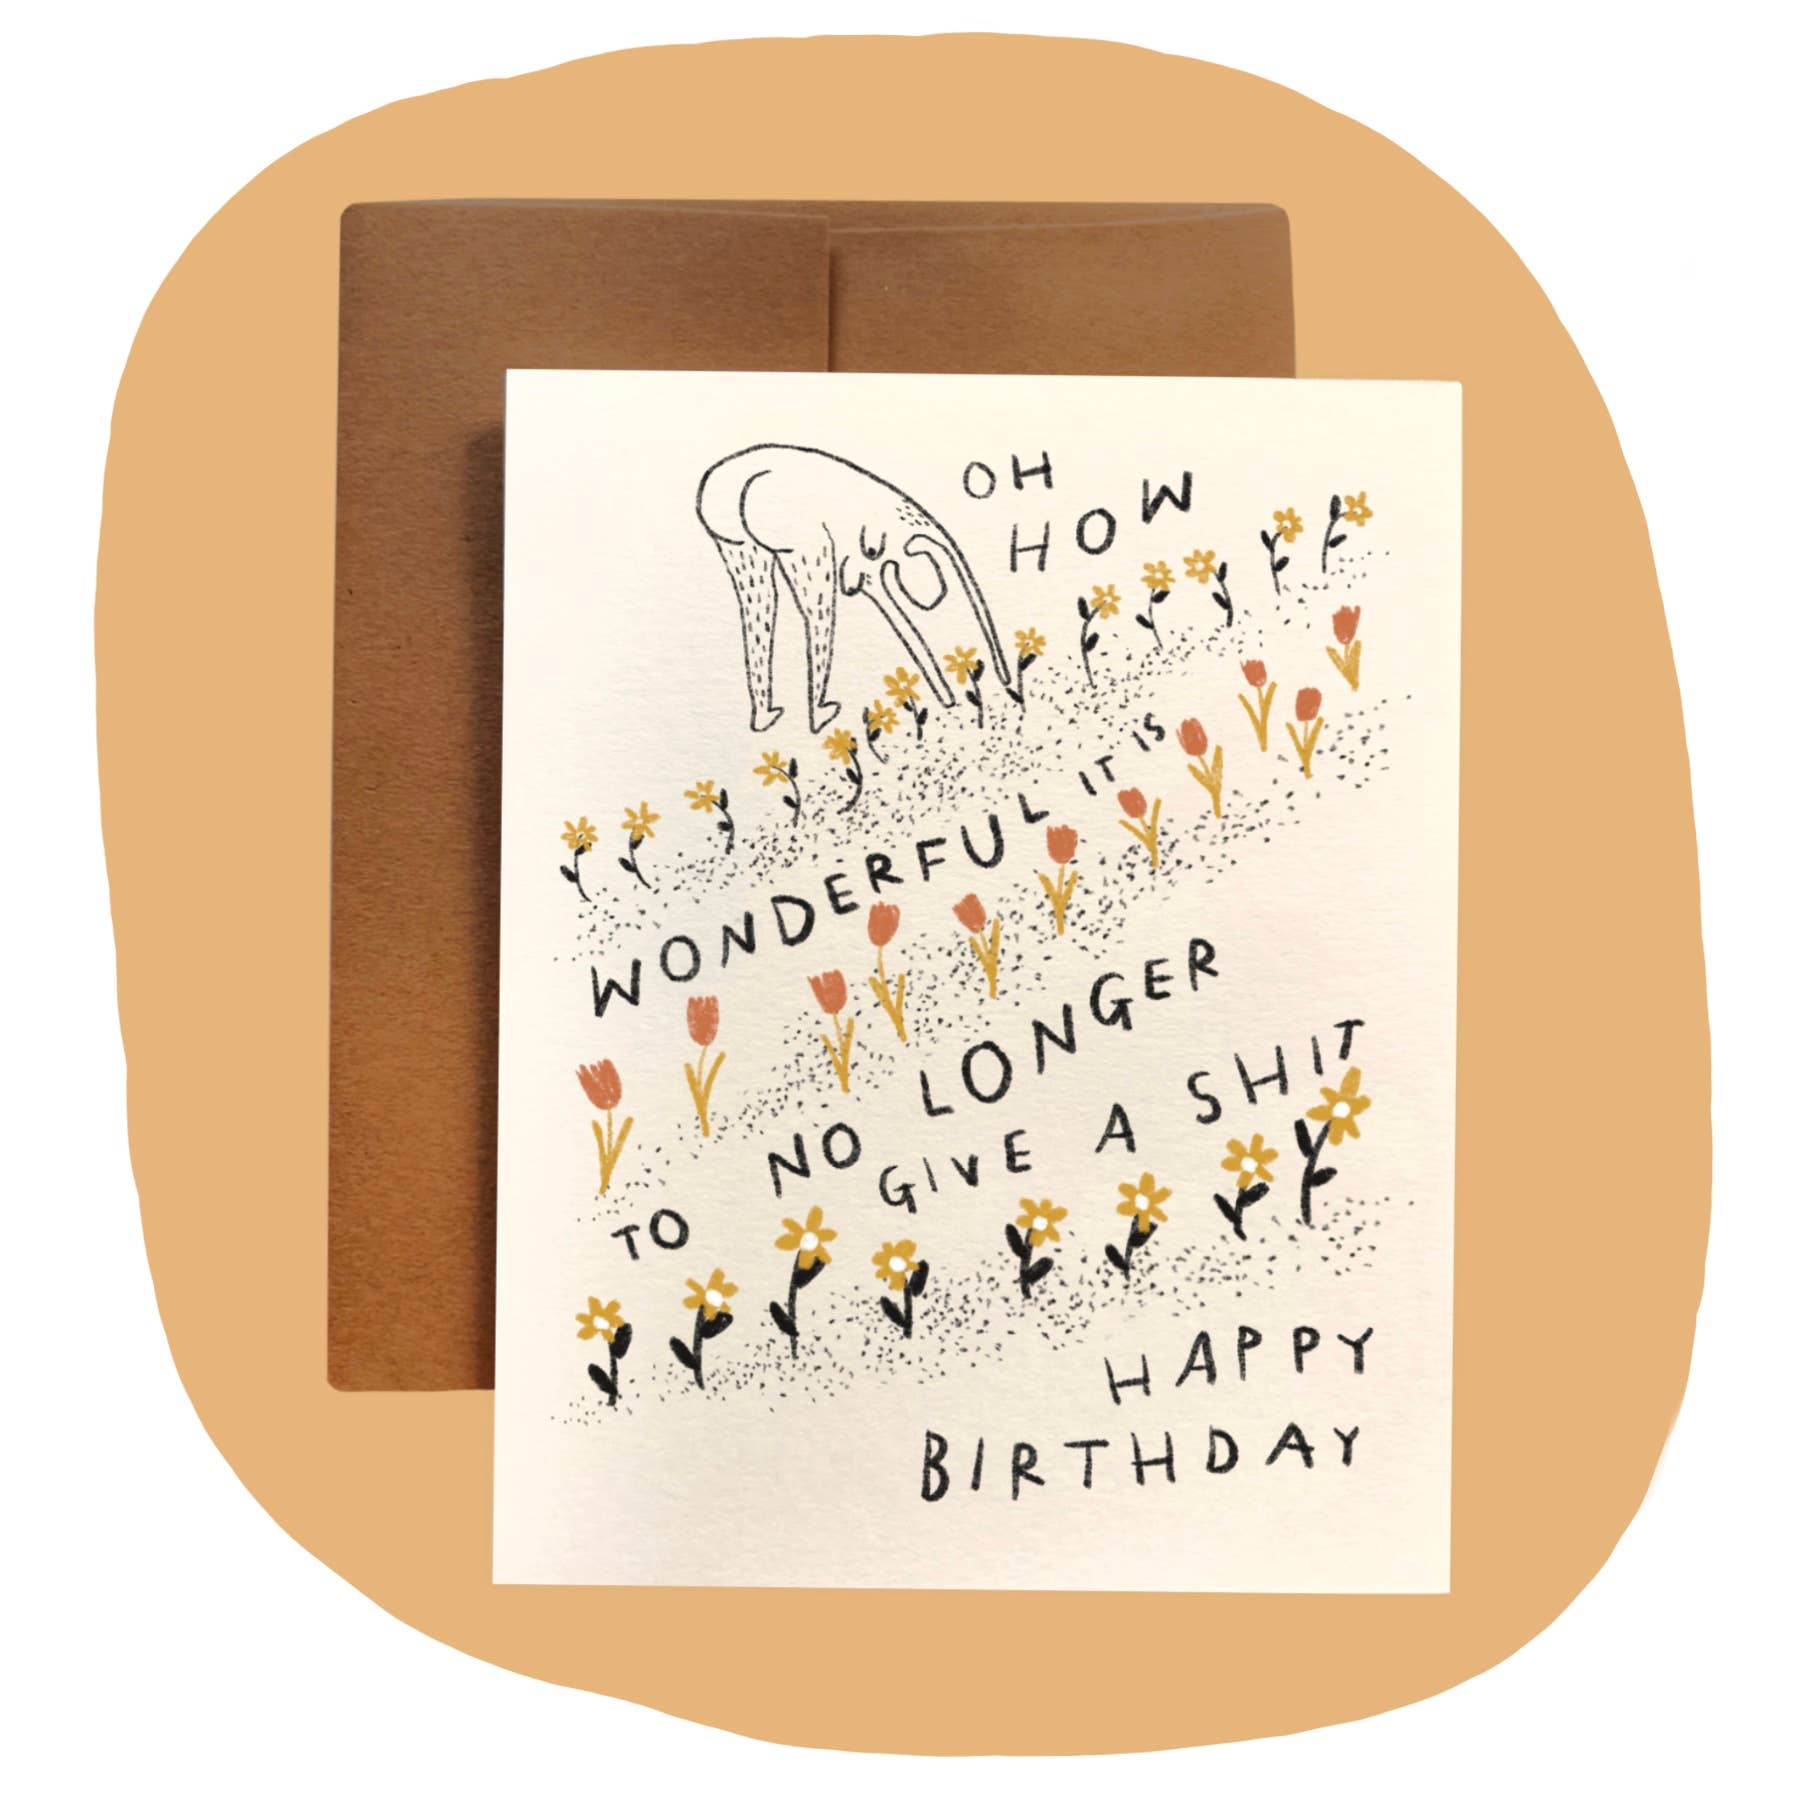 "NO LONGER GIVE A SHIT" Birthday Card